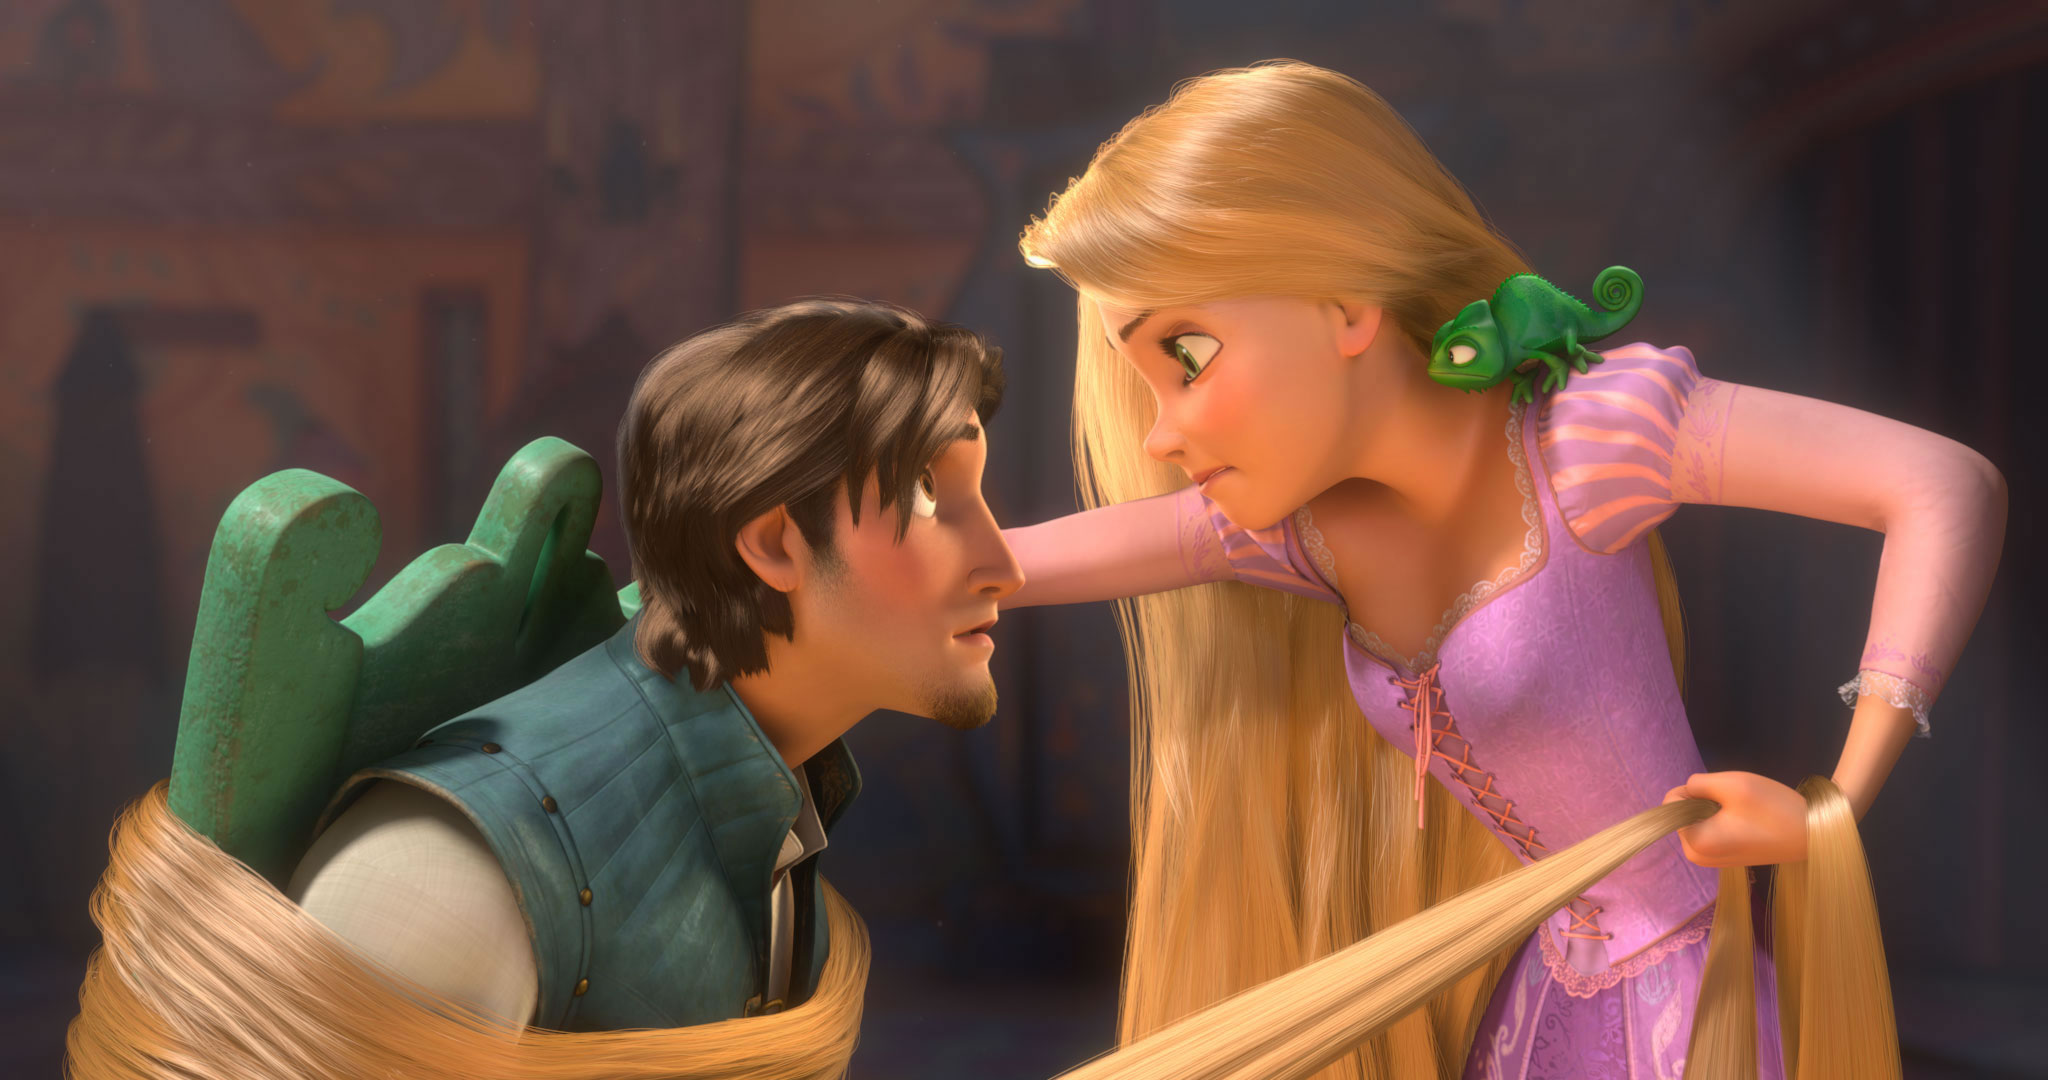 Rapunzel Ties up Flynn from Disney's Movie Tangled Desktop Wallpaper